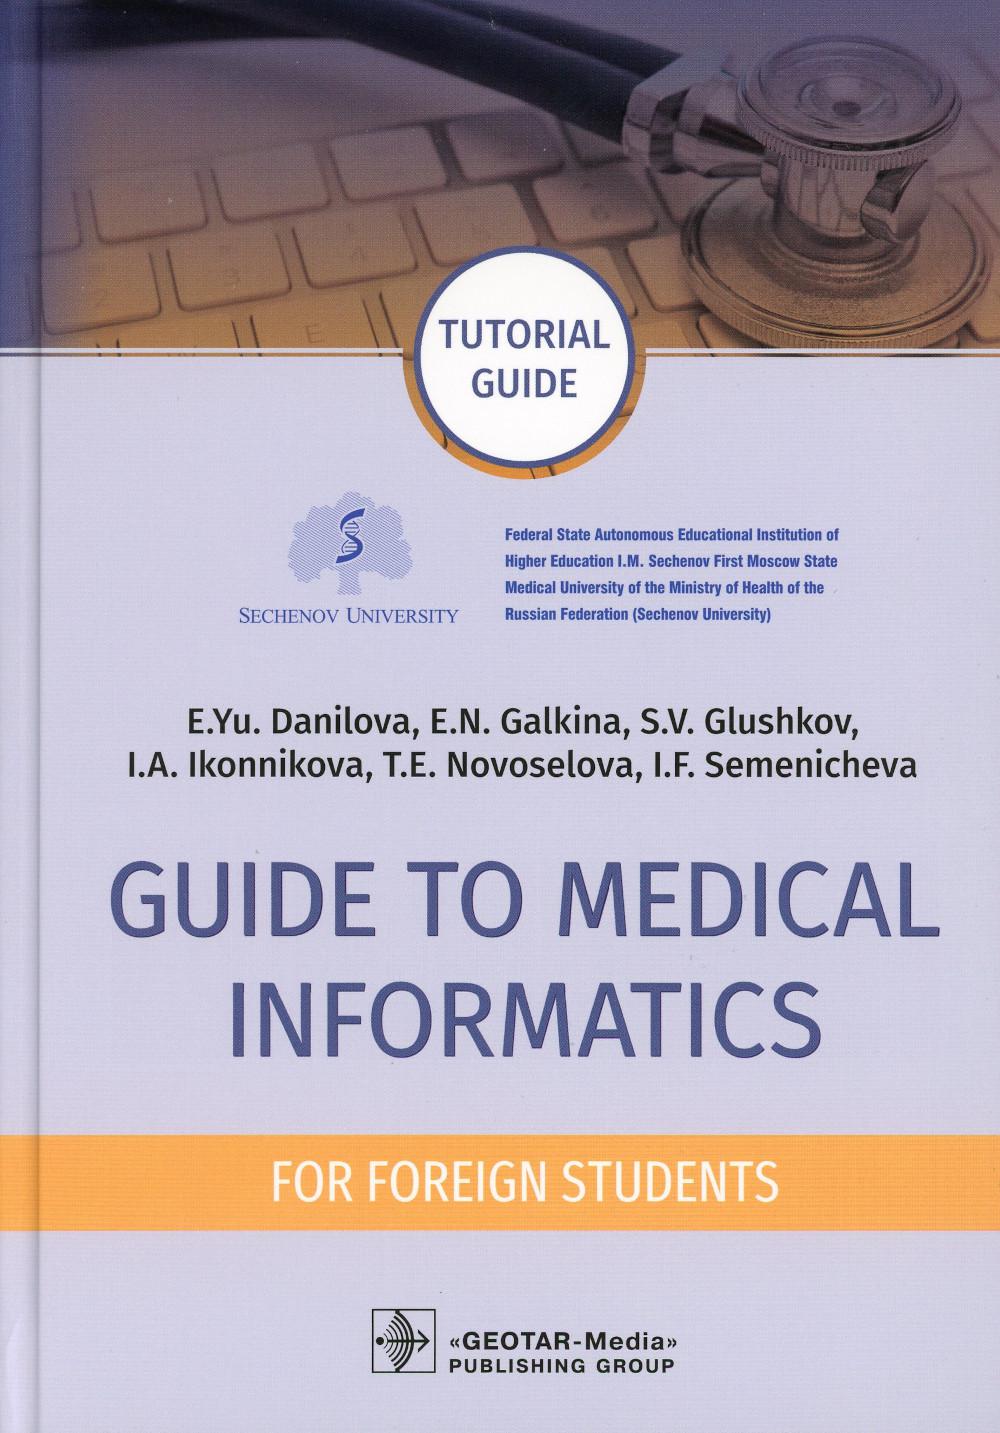 Guide to Medical Informatics for Foreign Students : tutorial guide / E. Yu. Danilova, E. N. Galkina, S. V. Glushkov [et l.].  Moscow : GEOTAR- Media, 2022.  272 p. : ill.